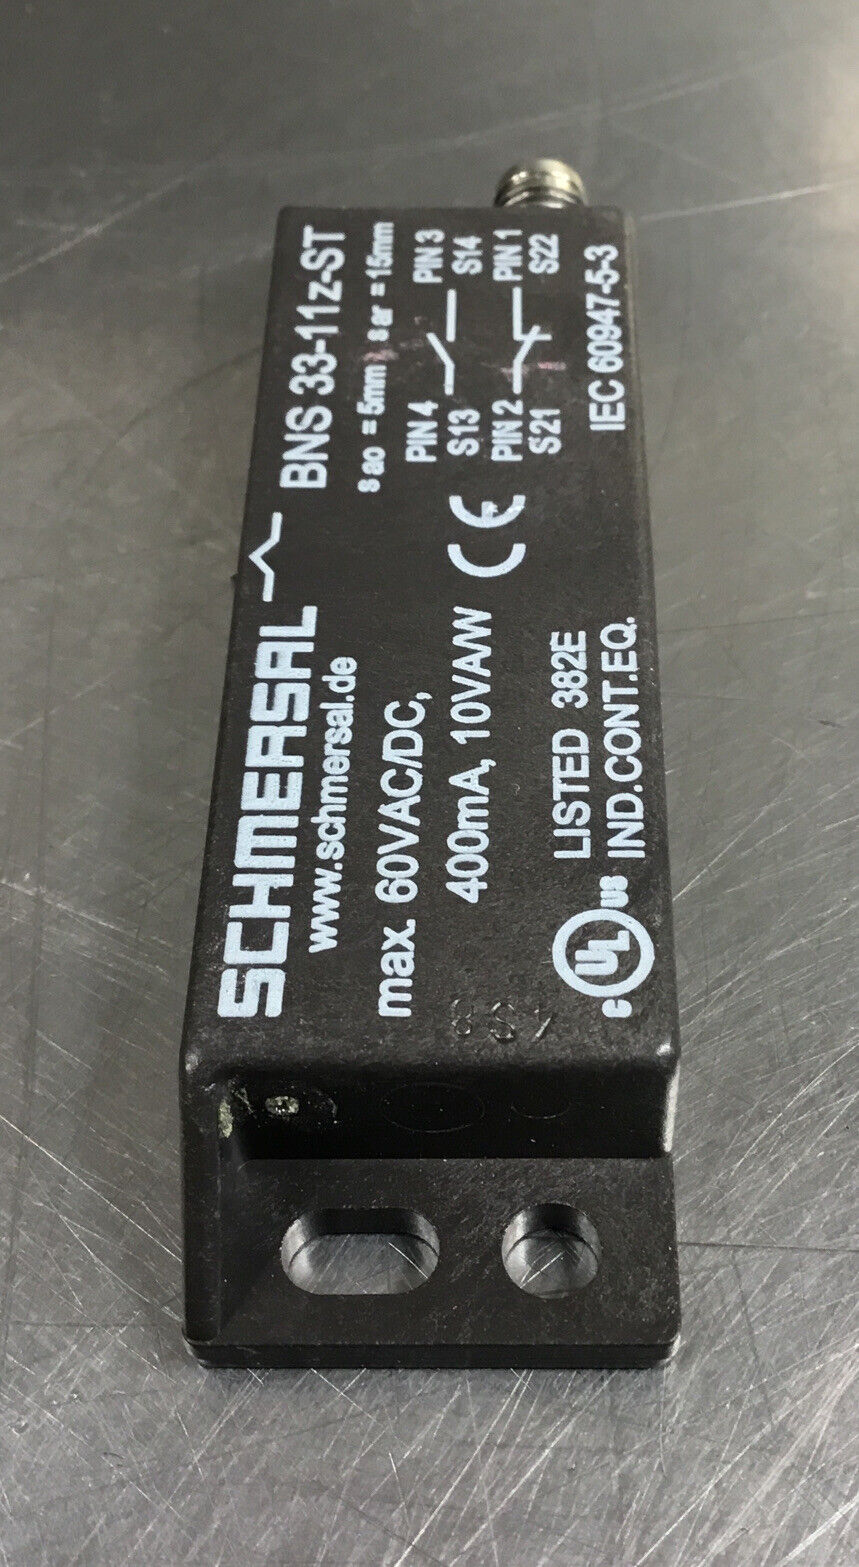 SCHMERSAL  BNS 33-11Z-ST  Magnetic Safety Sensor     5D